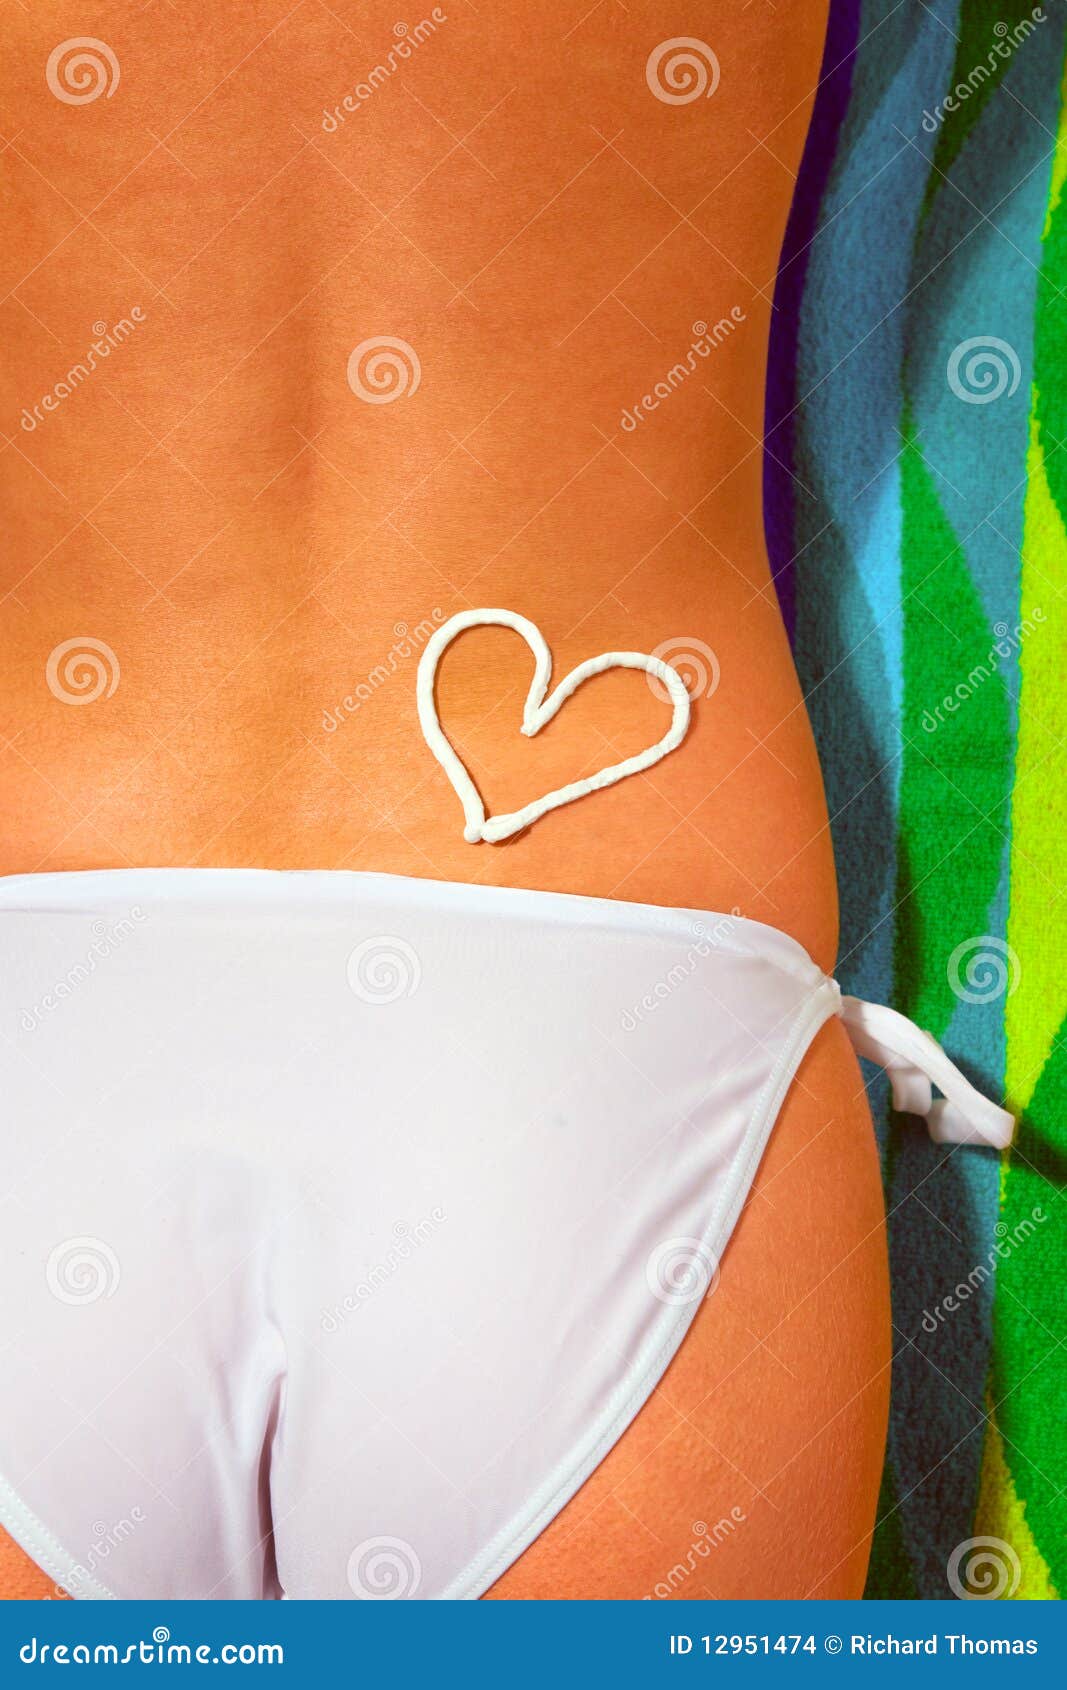 woman who loves sunbathing